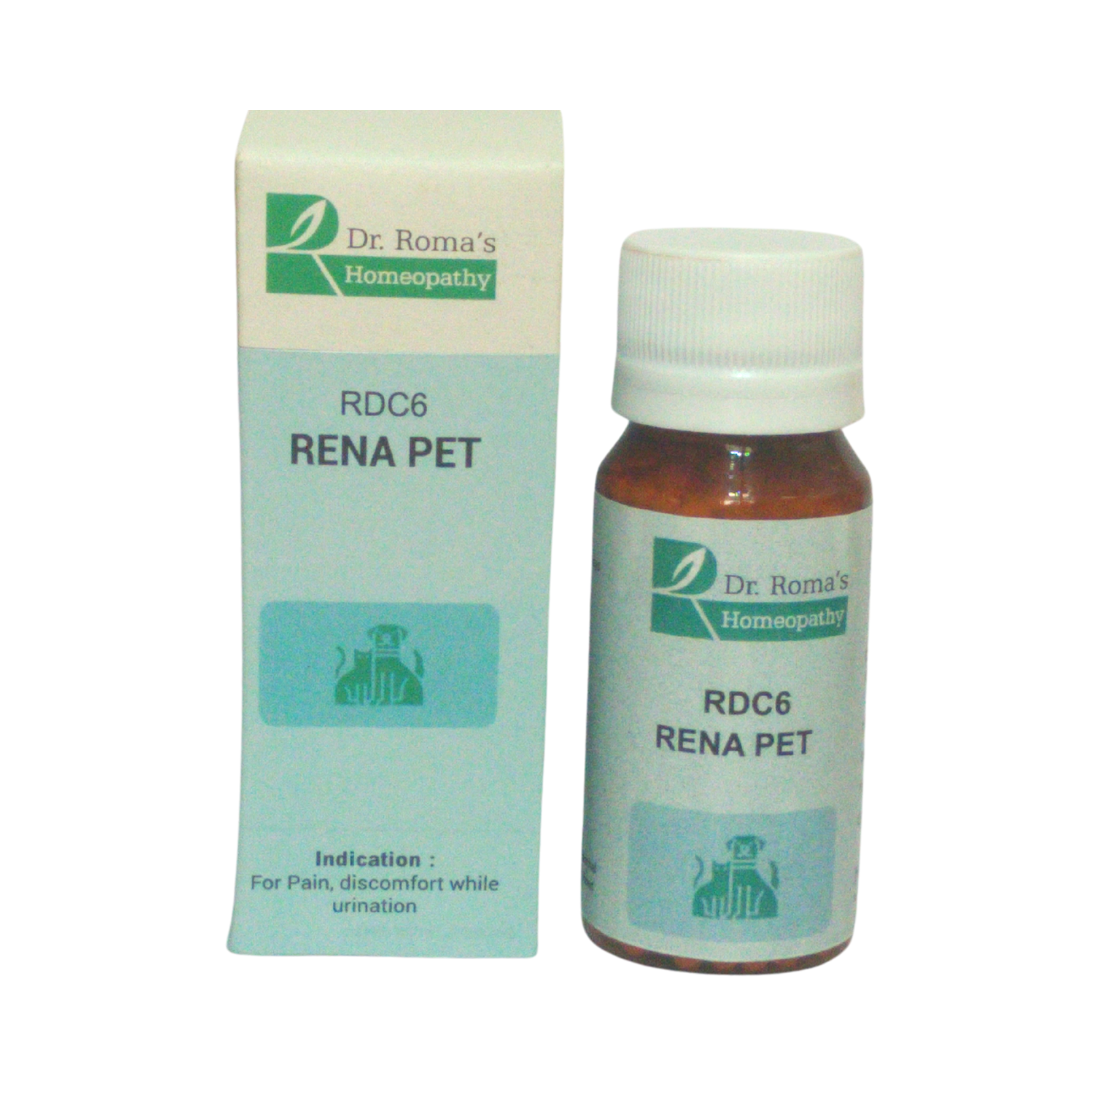 RENA PET - Pain, discomfort while URINATION - RDC 6